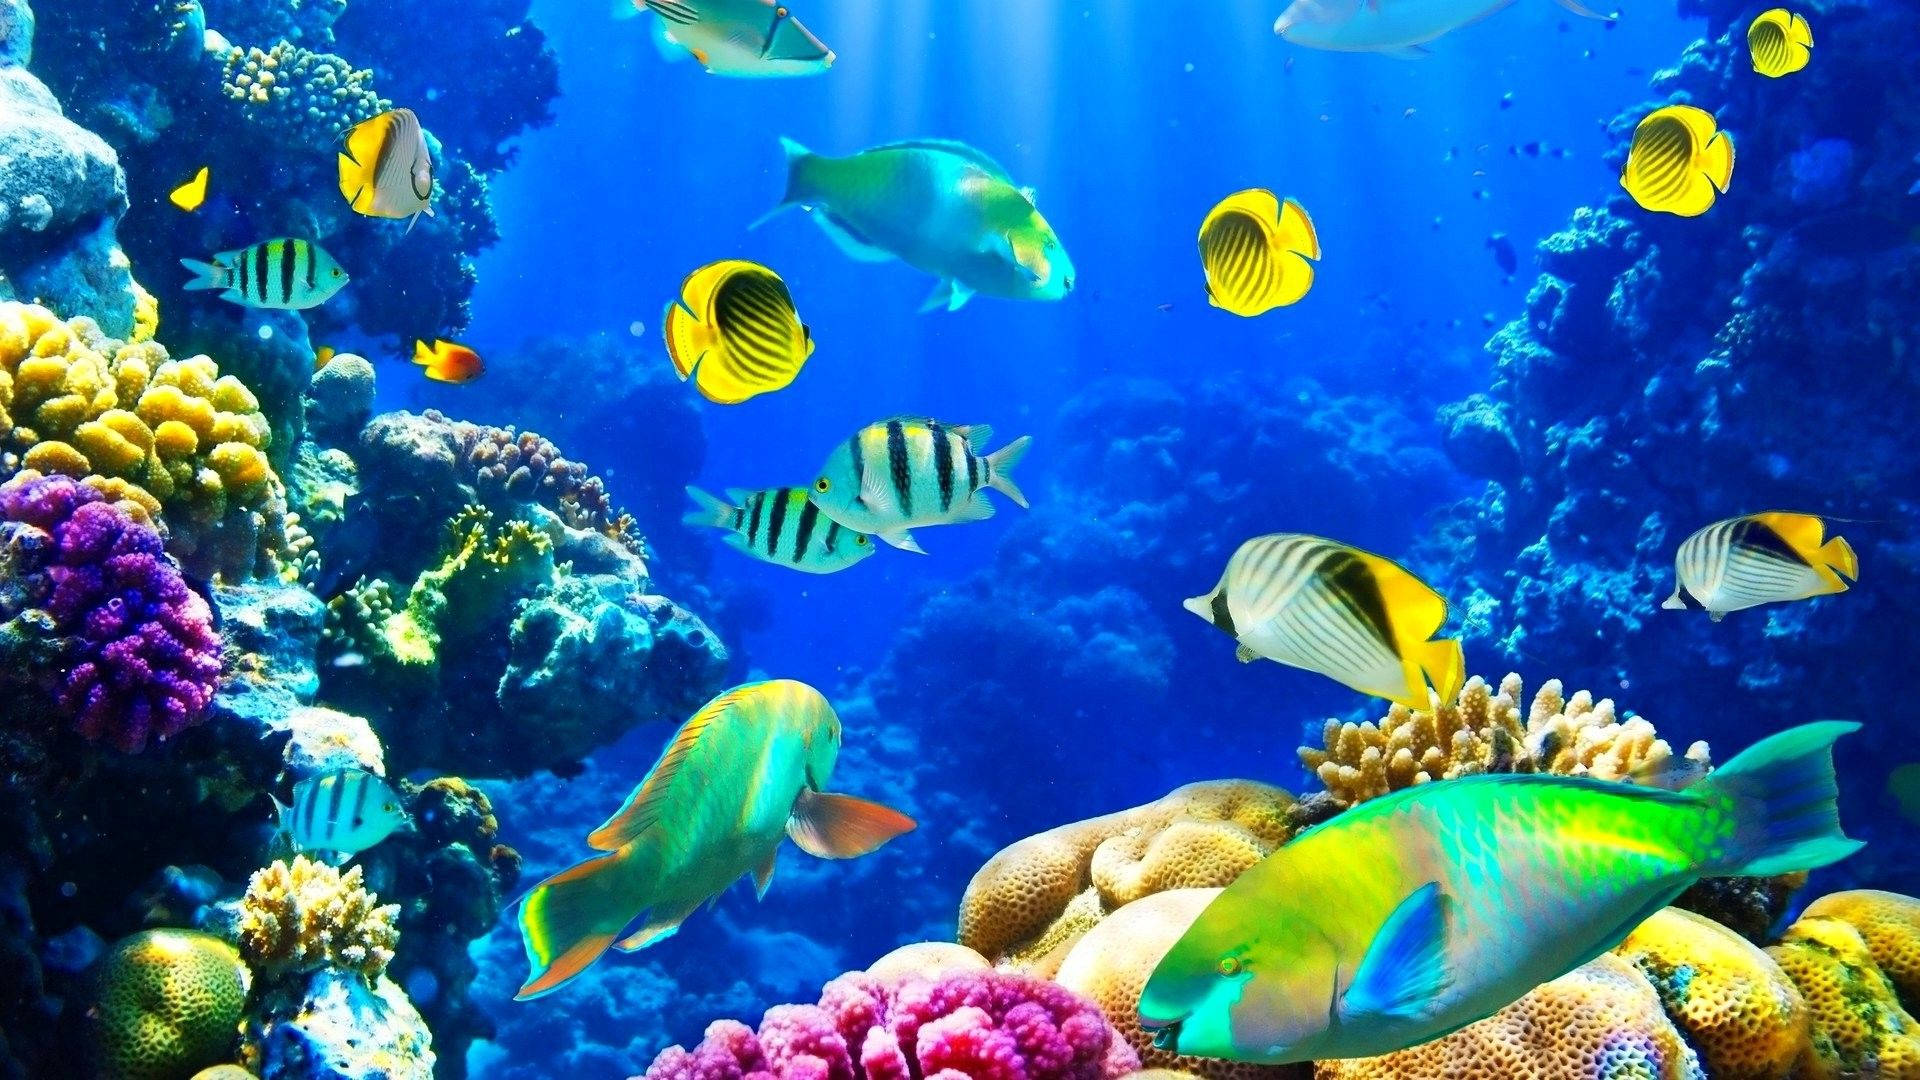 Free Underwater Wallpaper Downloads, [400+] Underwater Wallpapers for FREE  